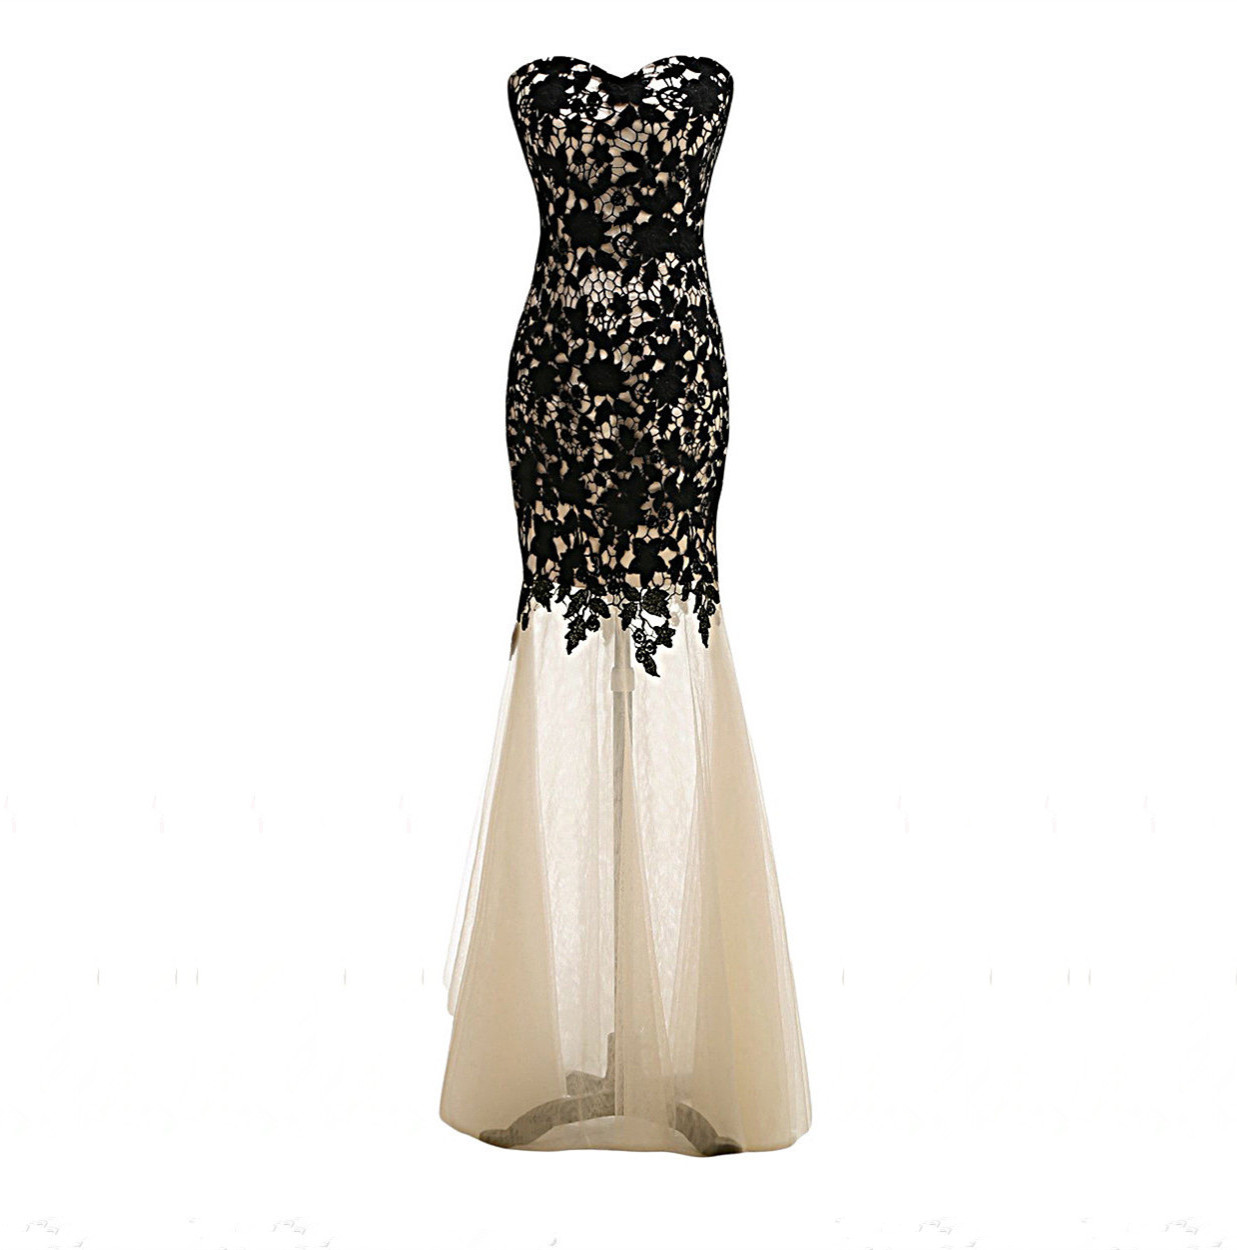 Sleeveless Prom Dress With Black Lavish Lace，lace Dress，black Lace Prom Dress，